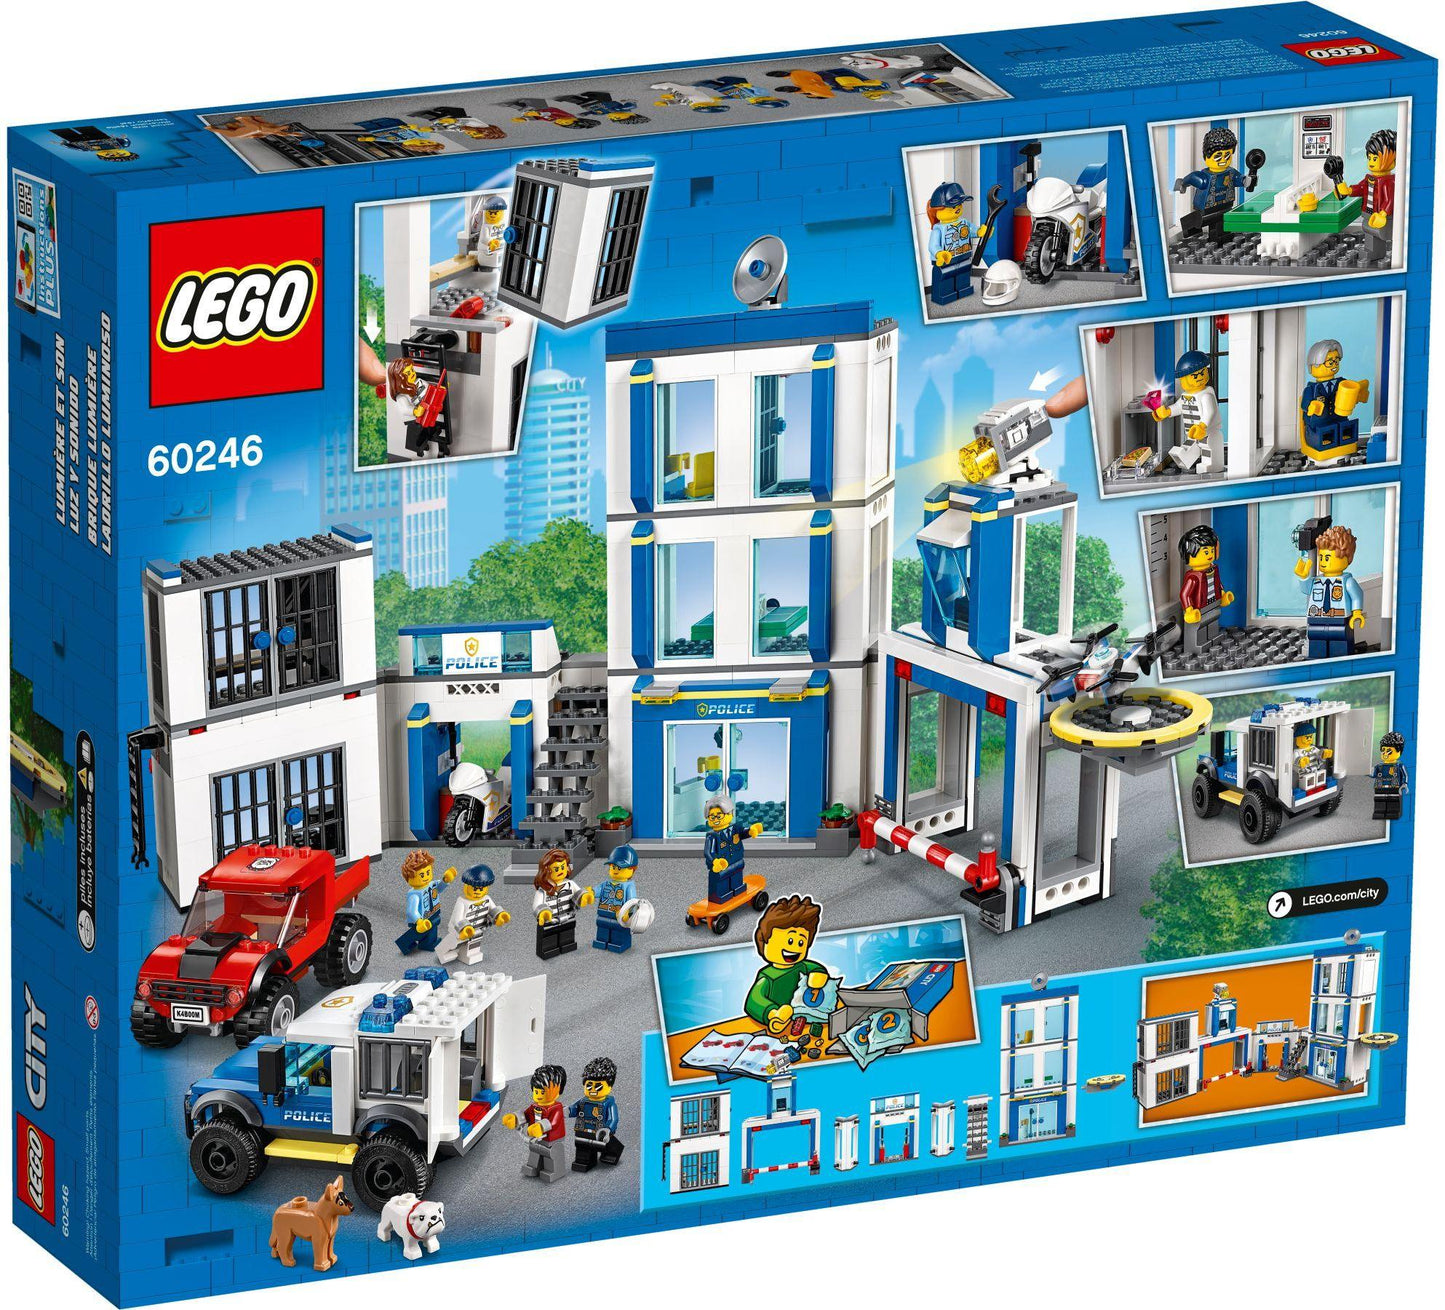 LEGO Uitgebreid Politie bureau 60246 City Politie LEGO CITY POLITIE @ 2TTOYS LEGO €. 79.99